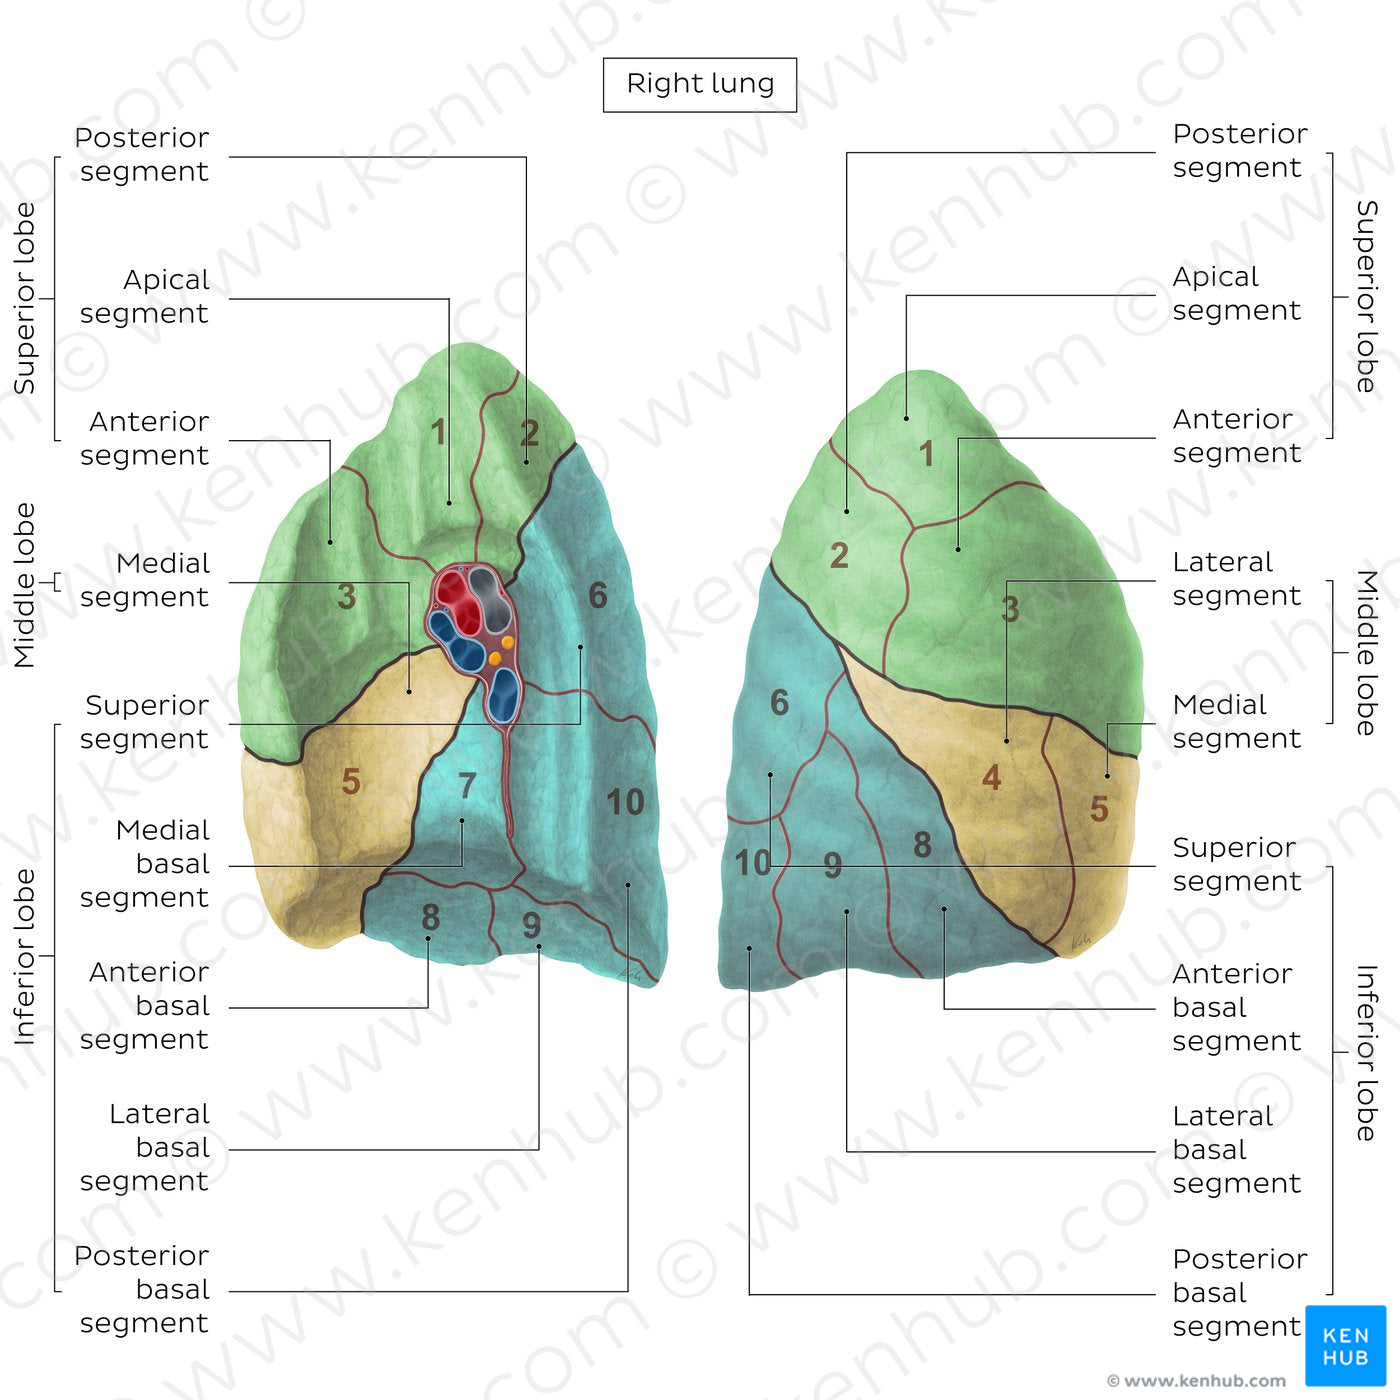 Bronchopulmonary segments (Right lung) (English)